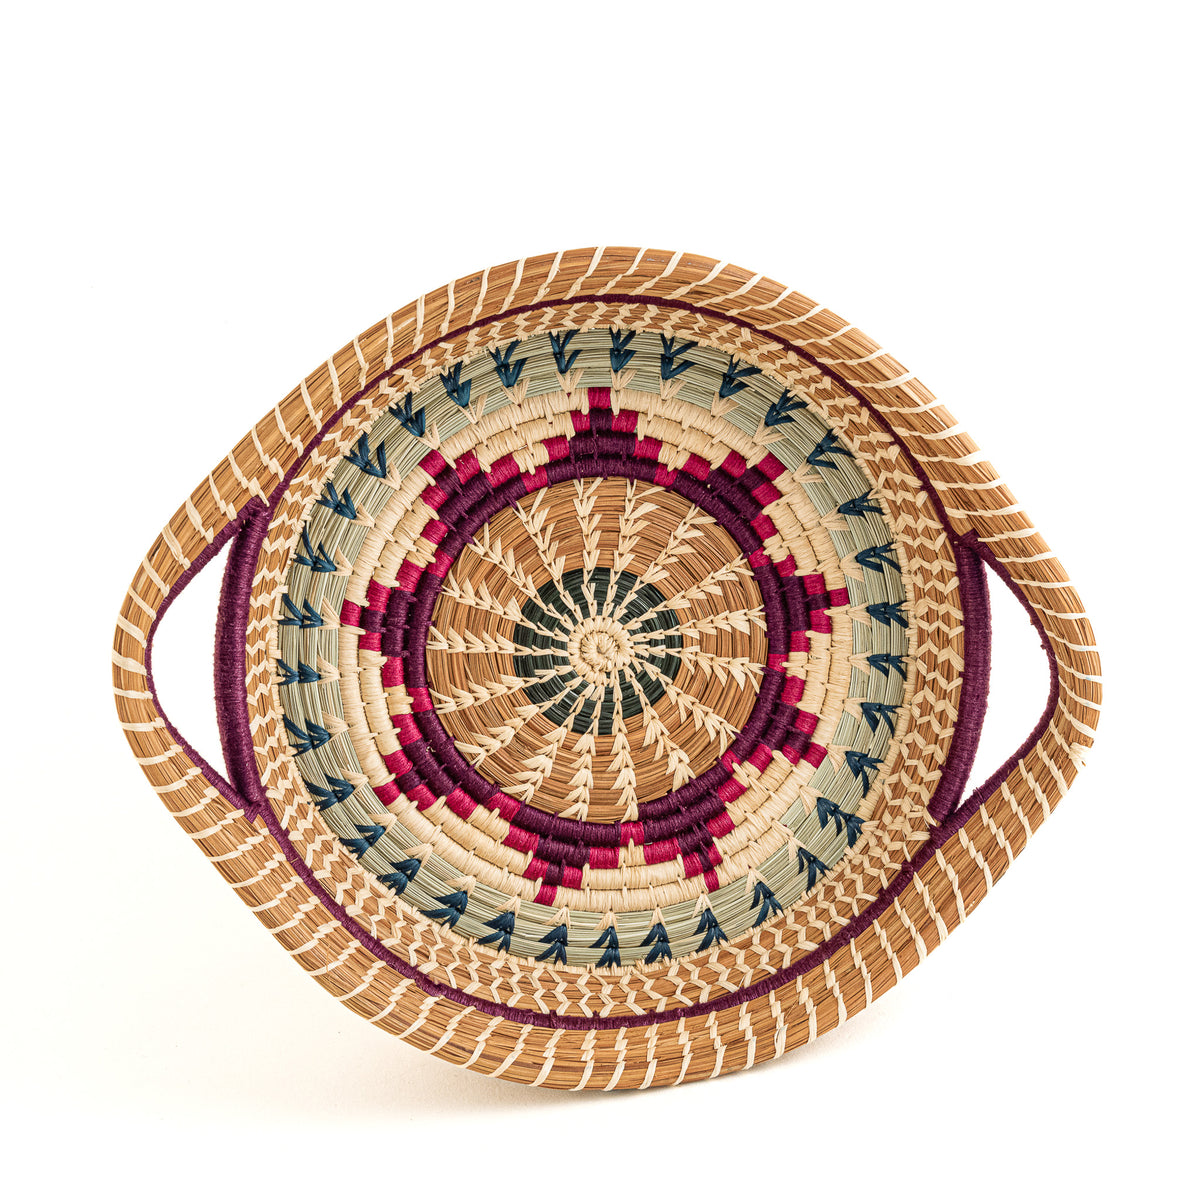 Guatemalan pine needle basket with handles in purple